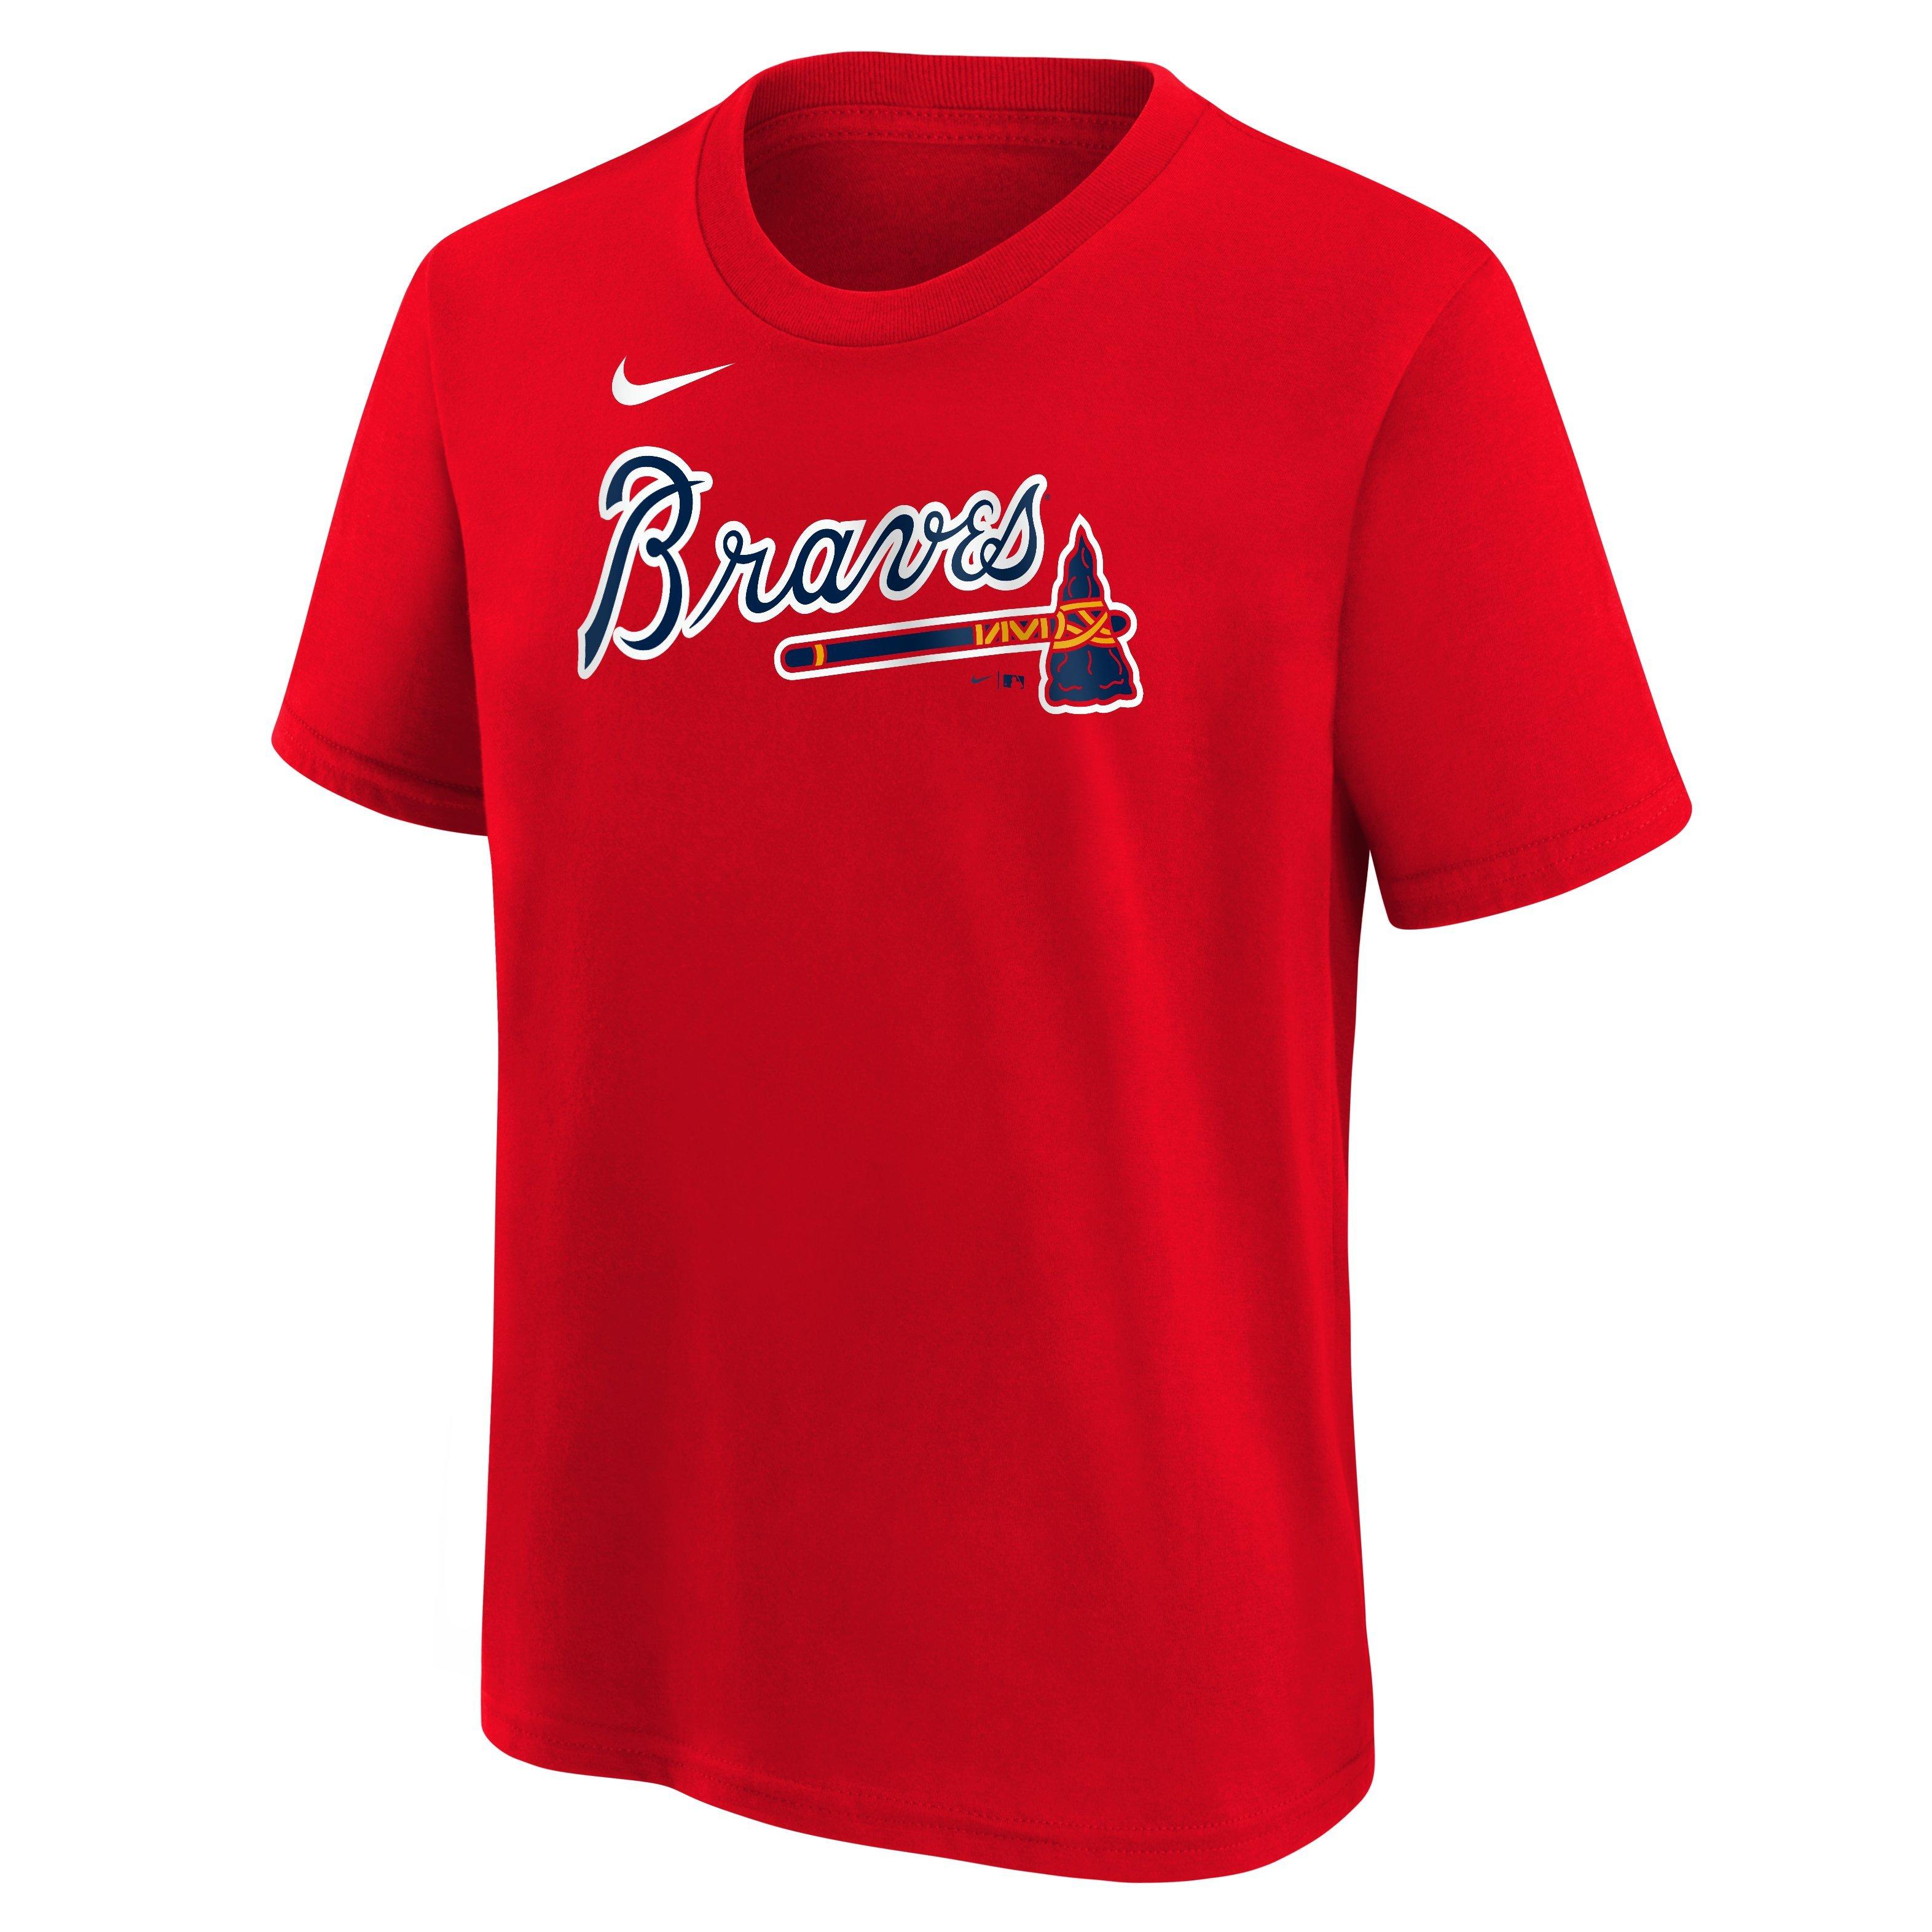 MLB Atlanta Braves Men's Short Sleeve T-Shirt - M